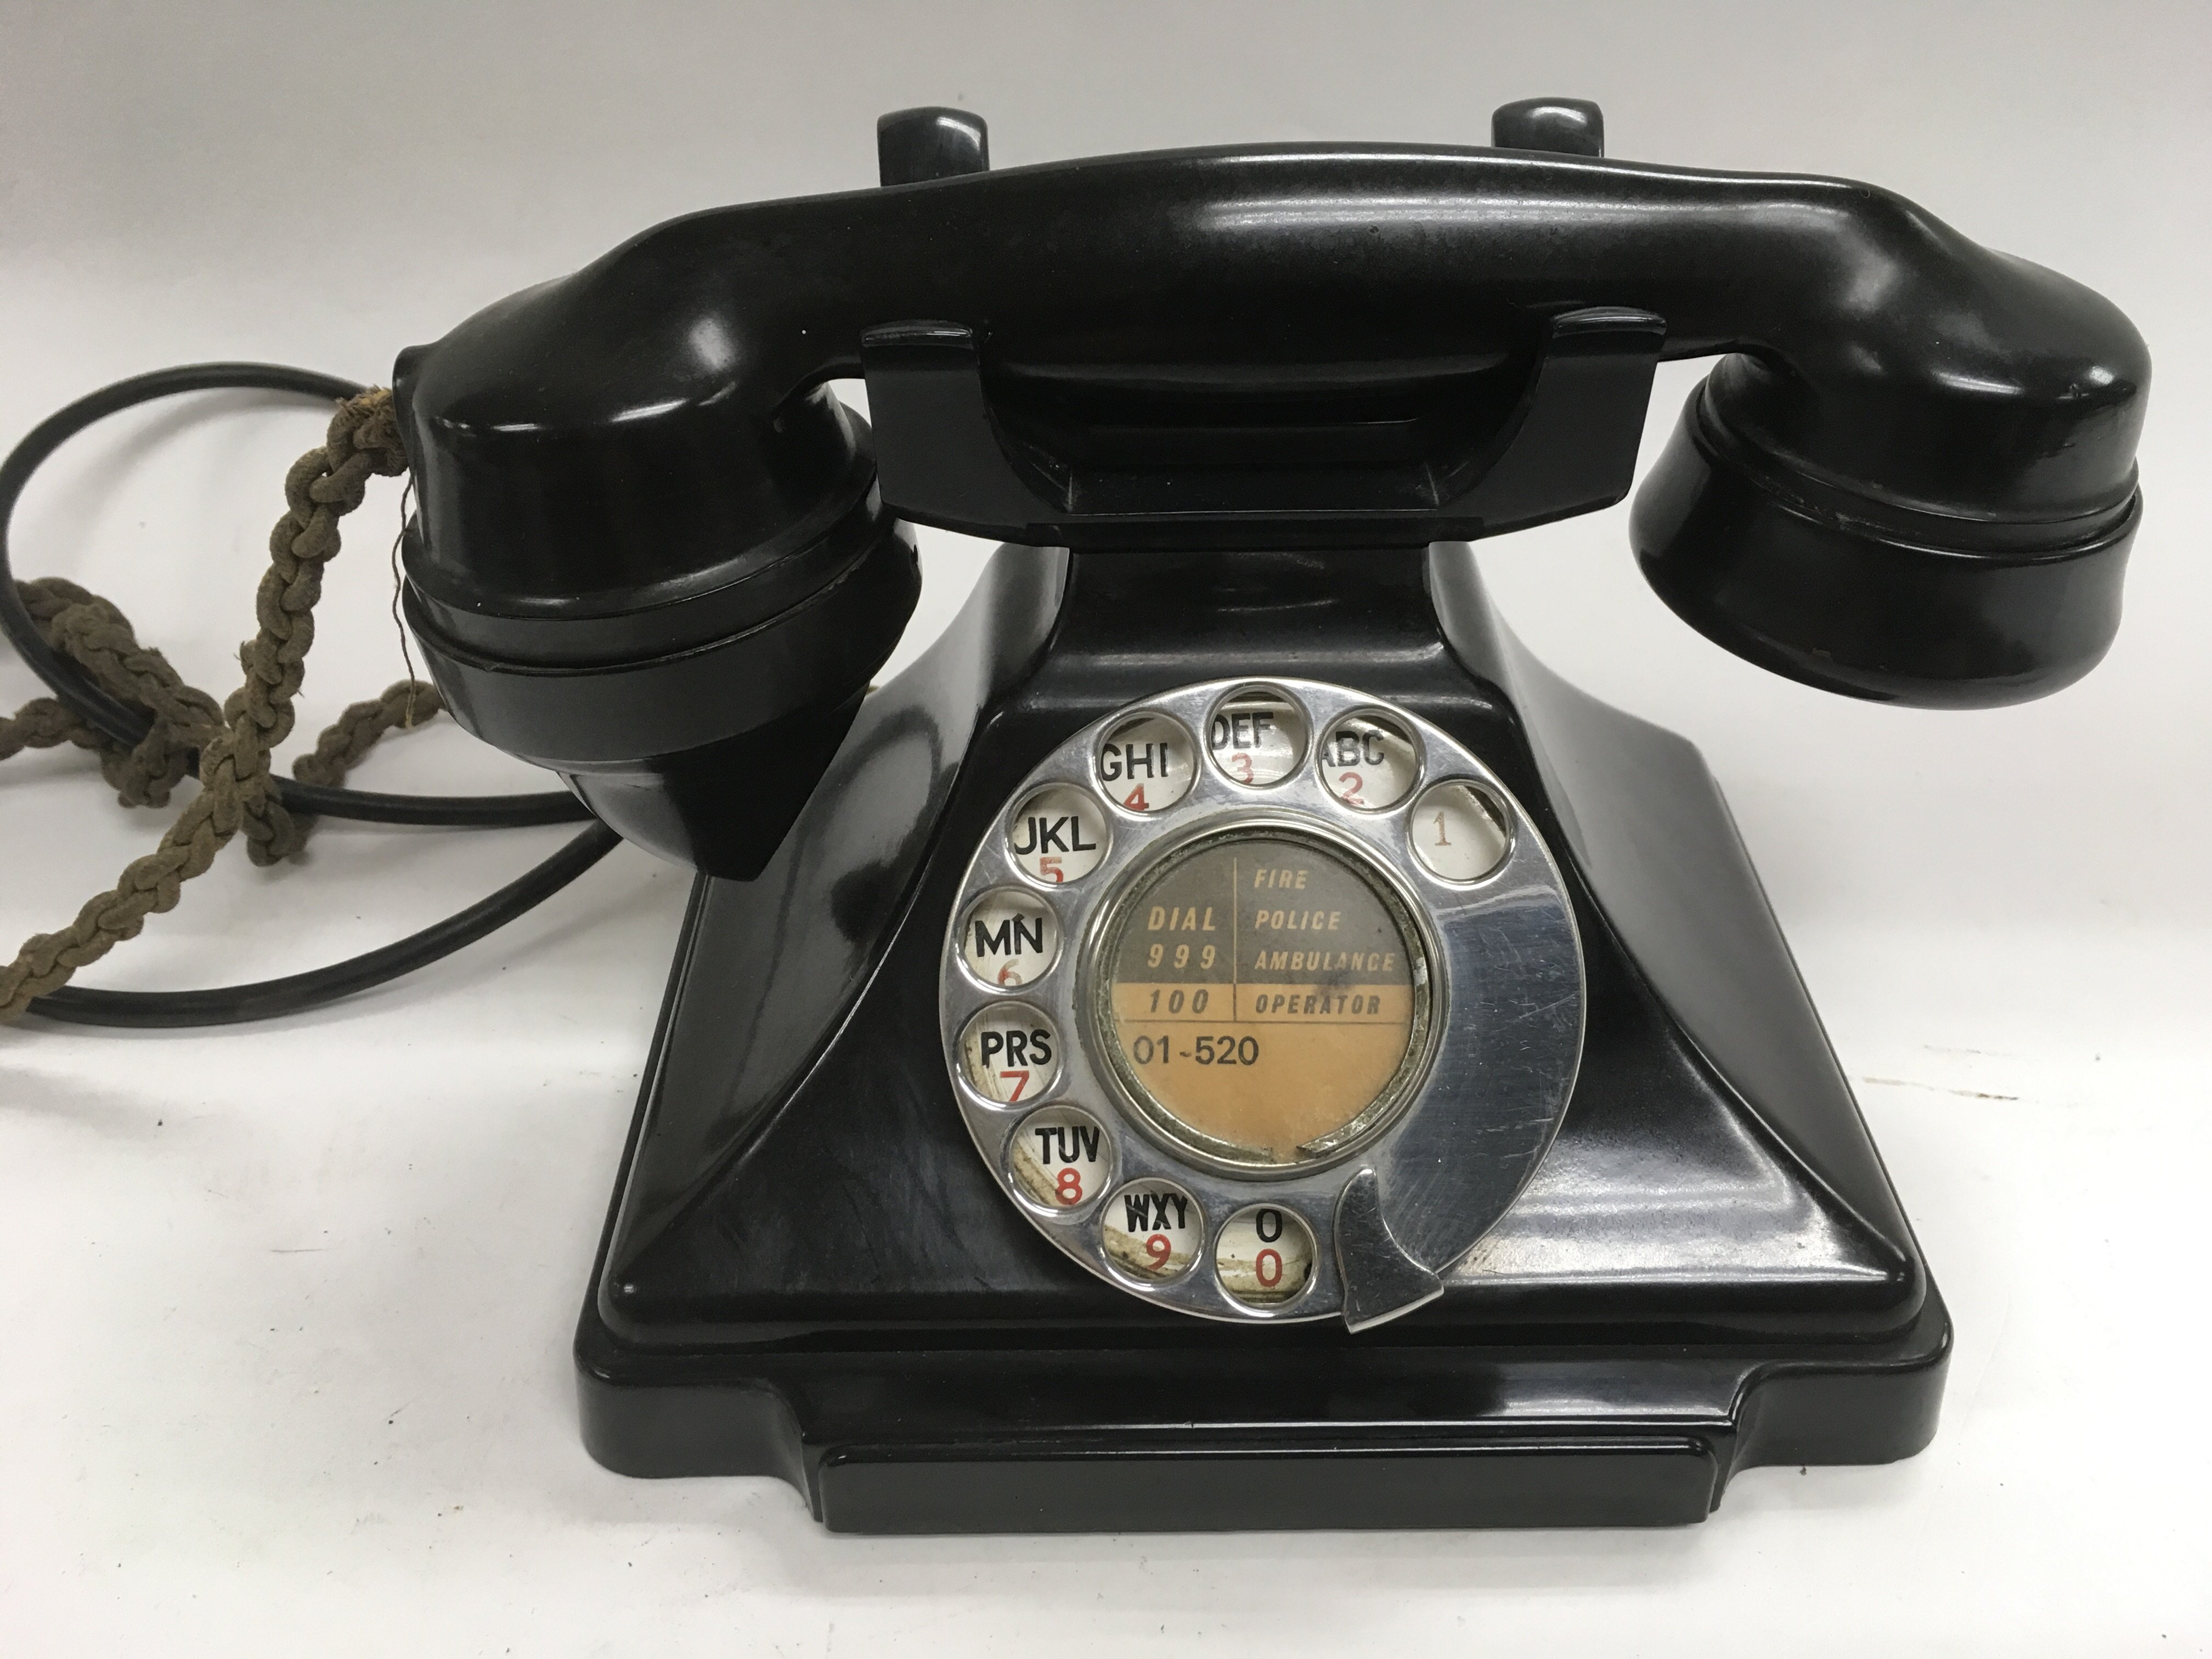 A circa 1930s bakelite telephone.